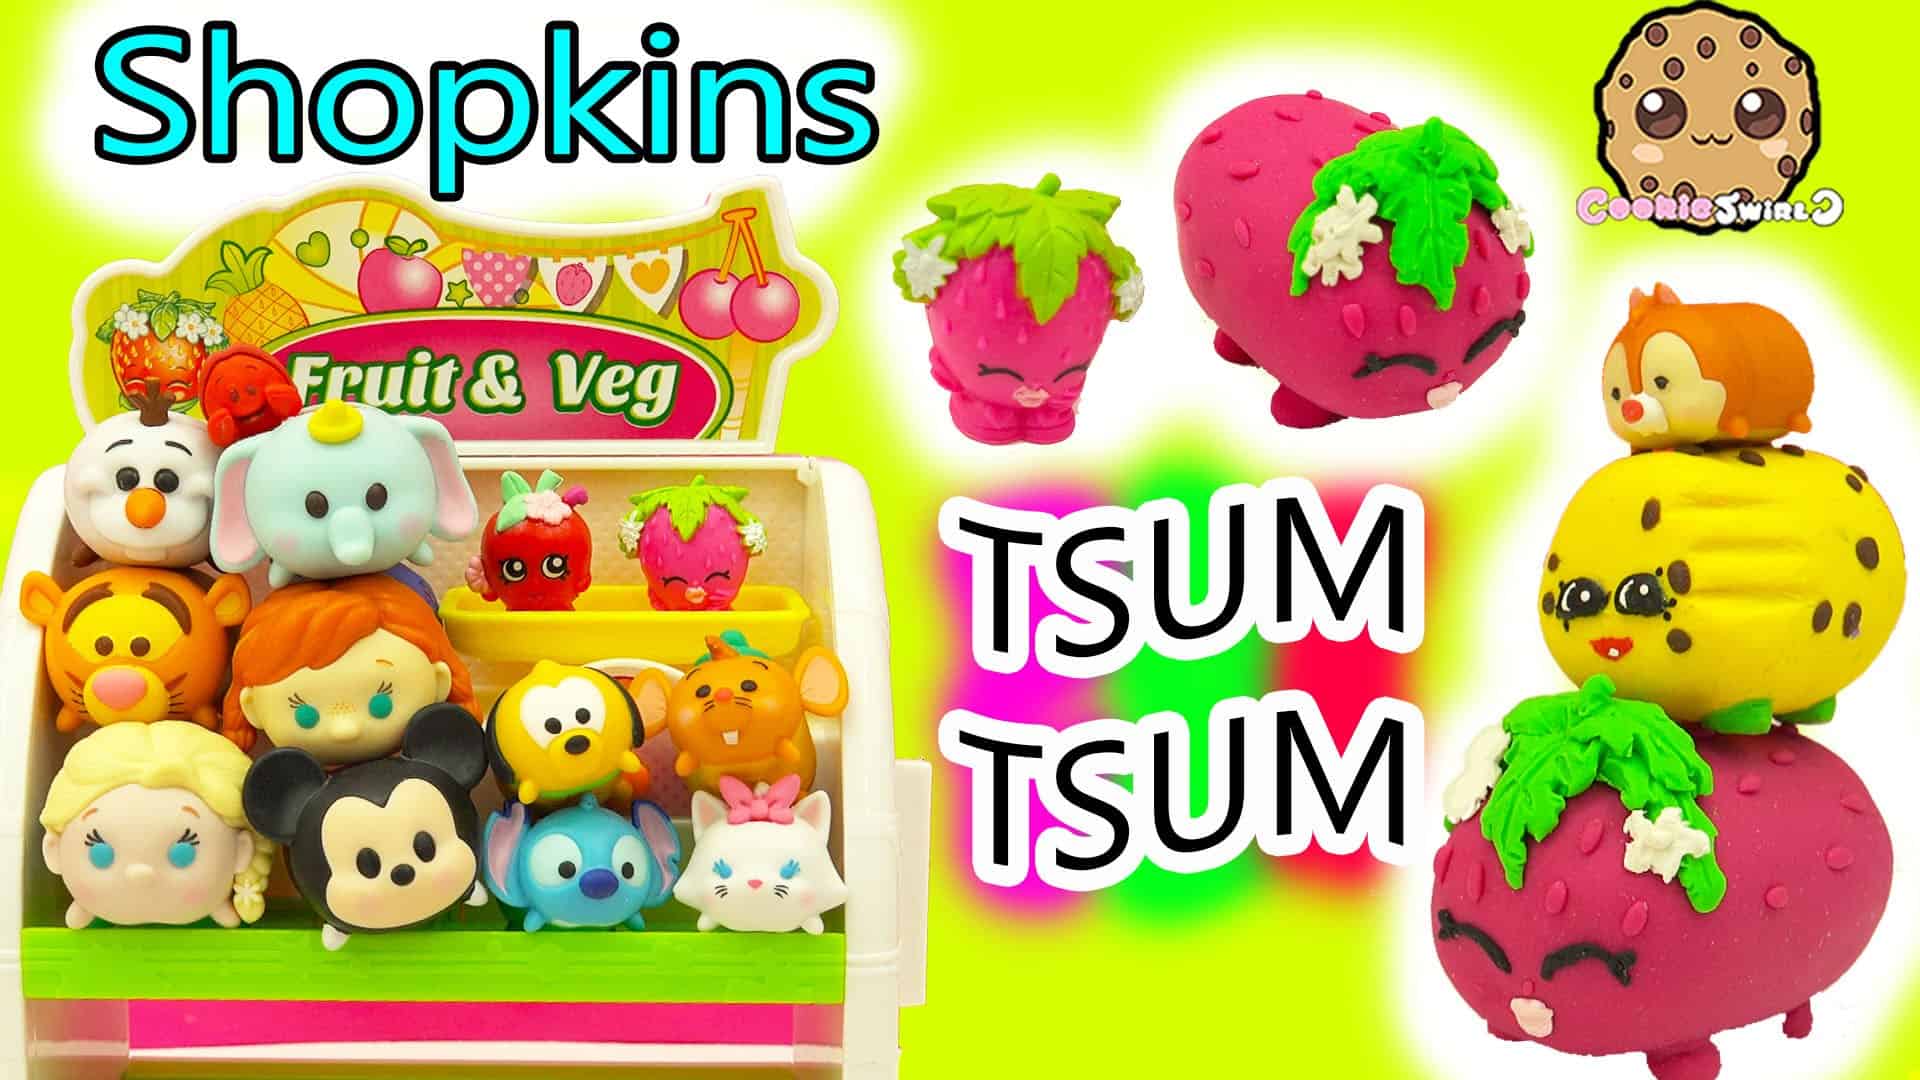 Shopkins inspired tsum tsums